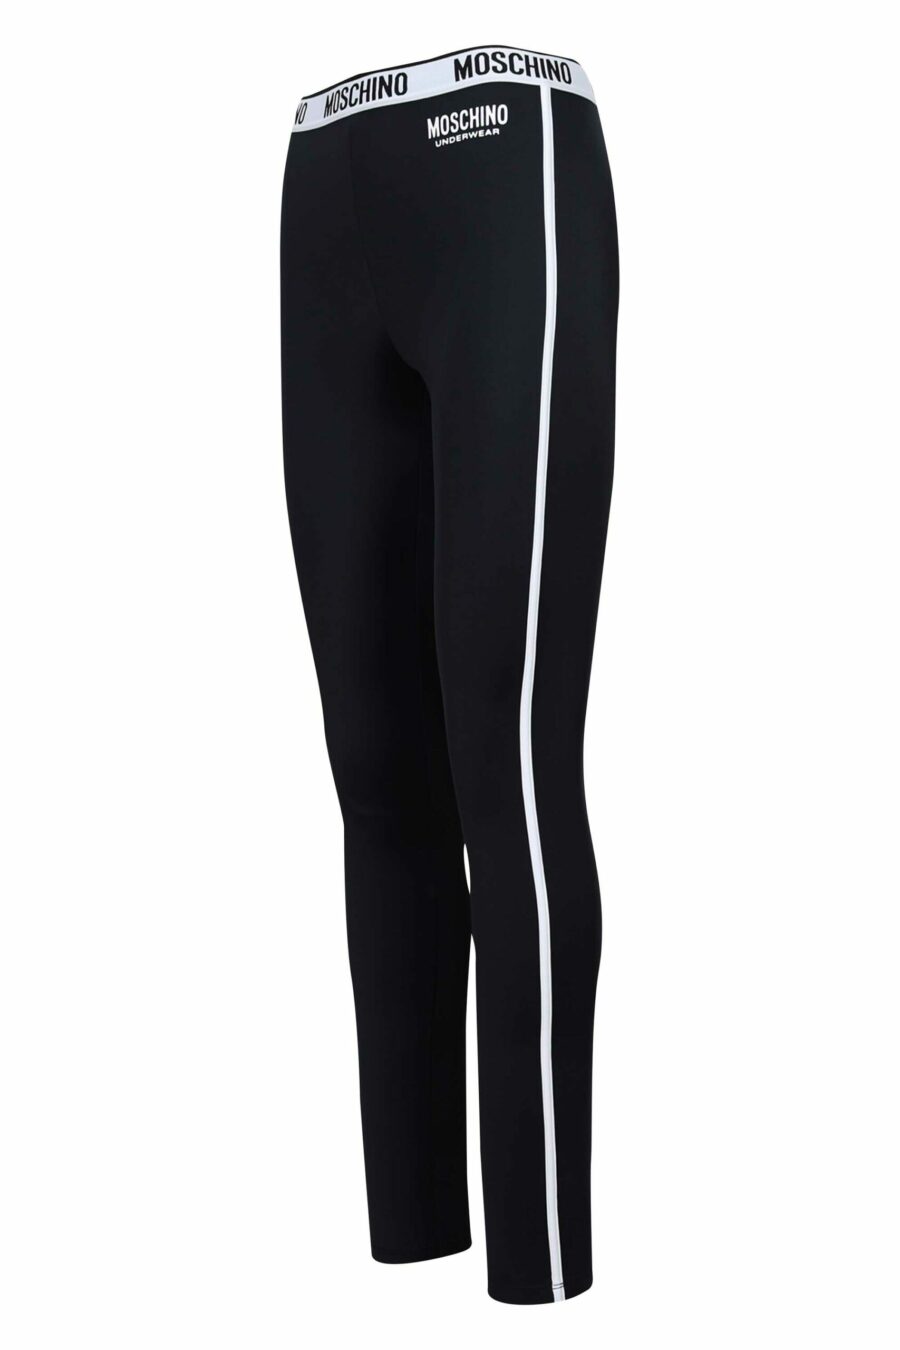 Black leggings with logo tape on waistband - 667113066738 1 scaled